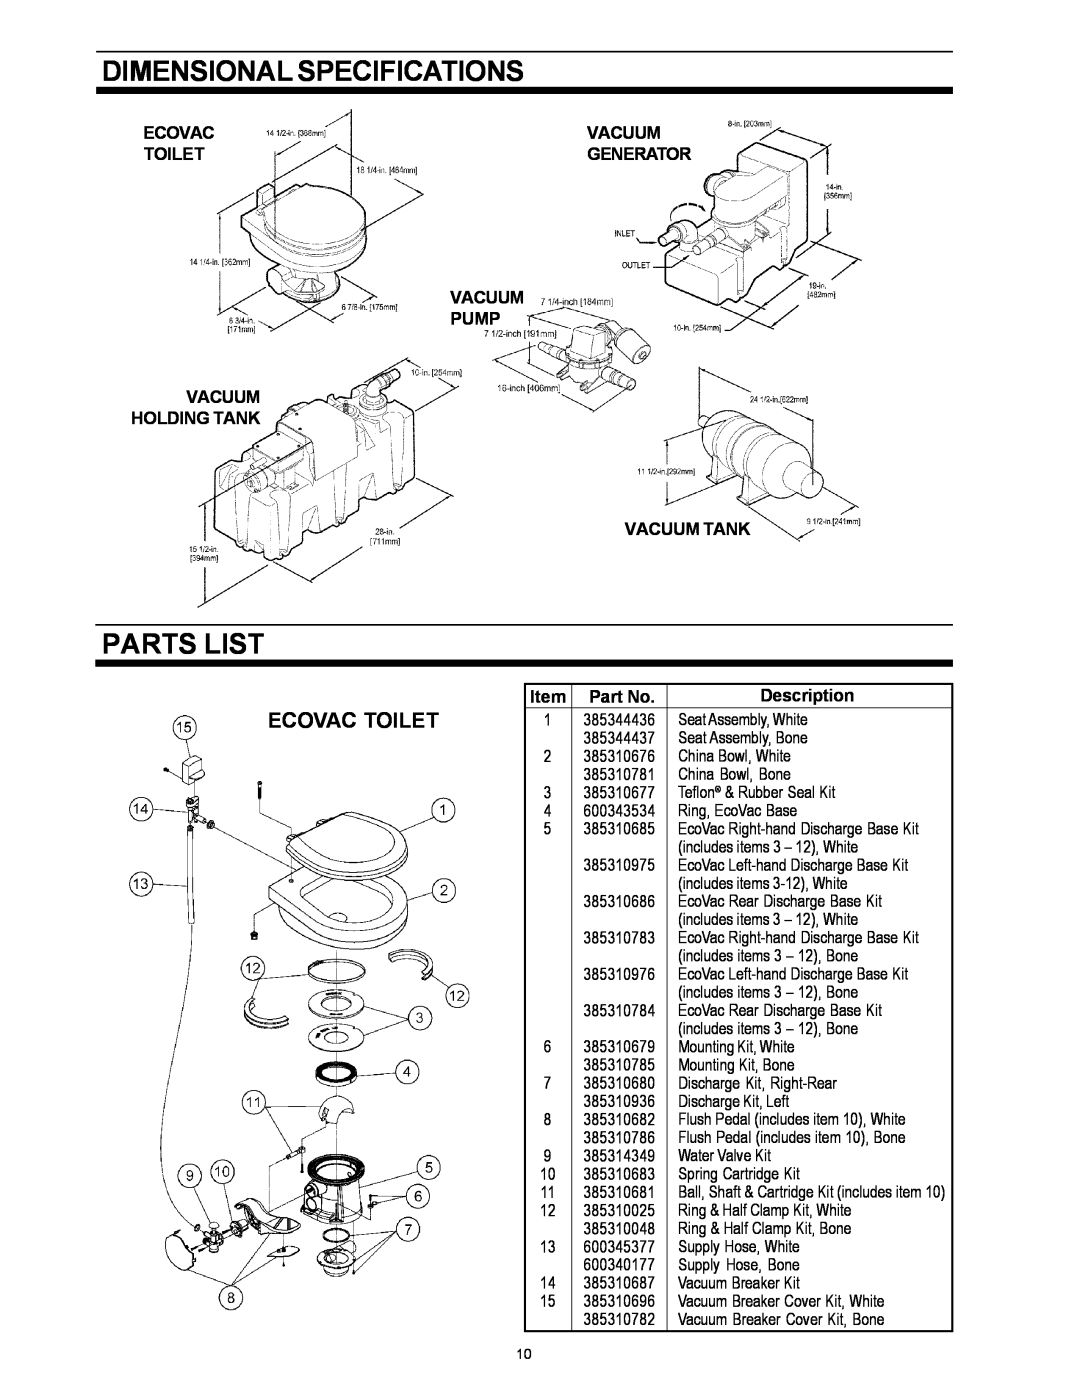 Dometic SANITATION SYSTEM owner manual Dimensional Specifications, Parts List, Ecovac Toilet, Vacuum, Description 